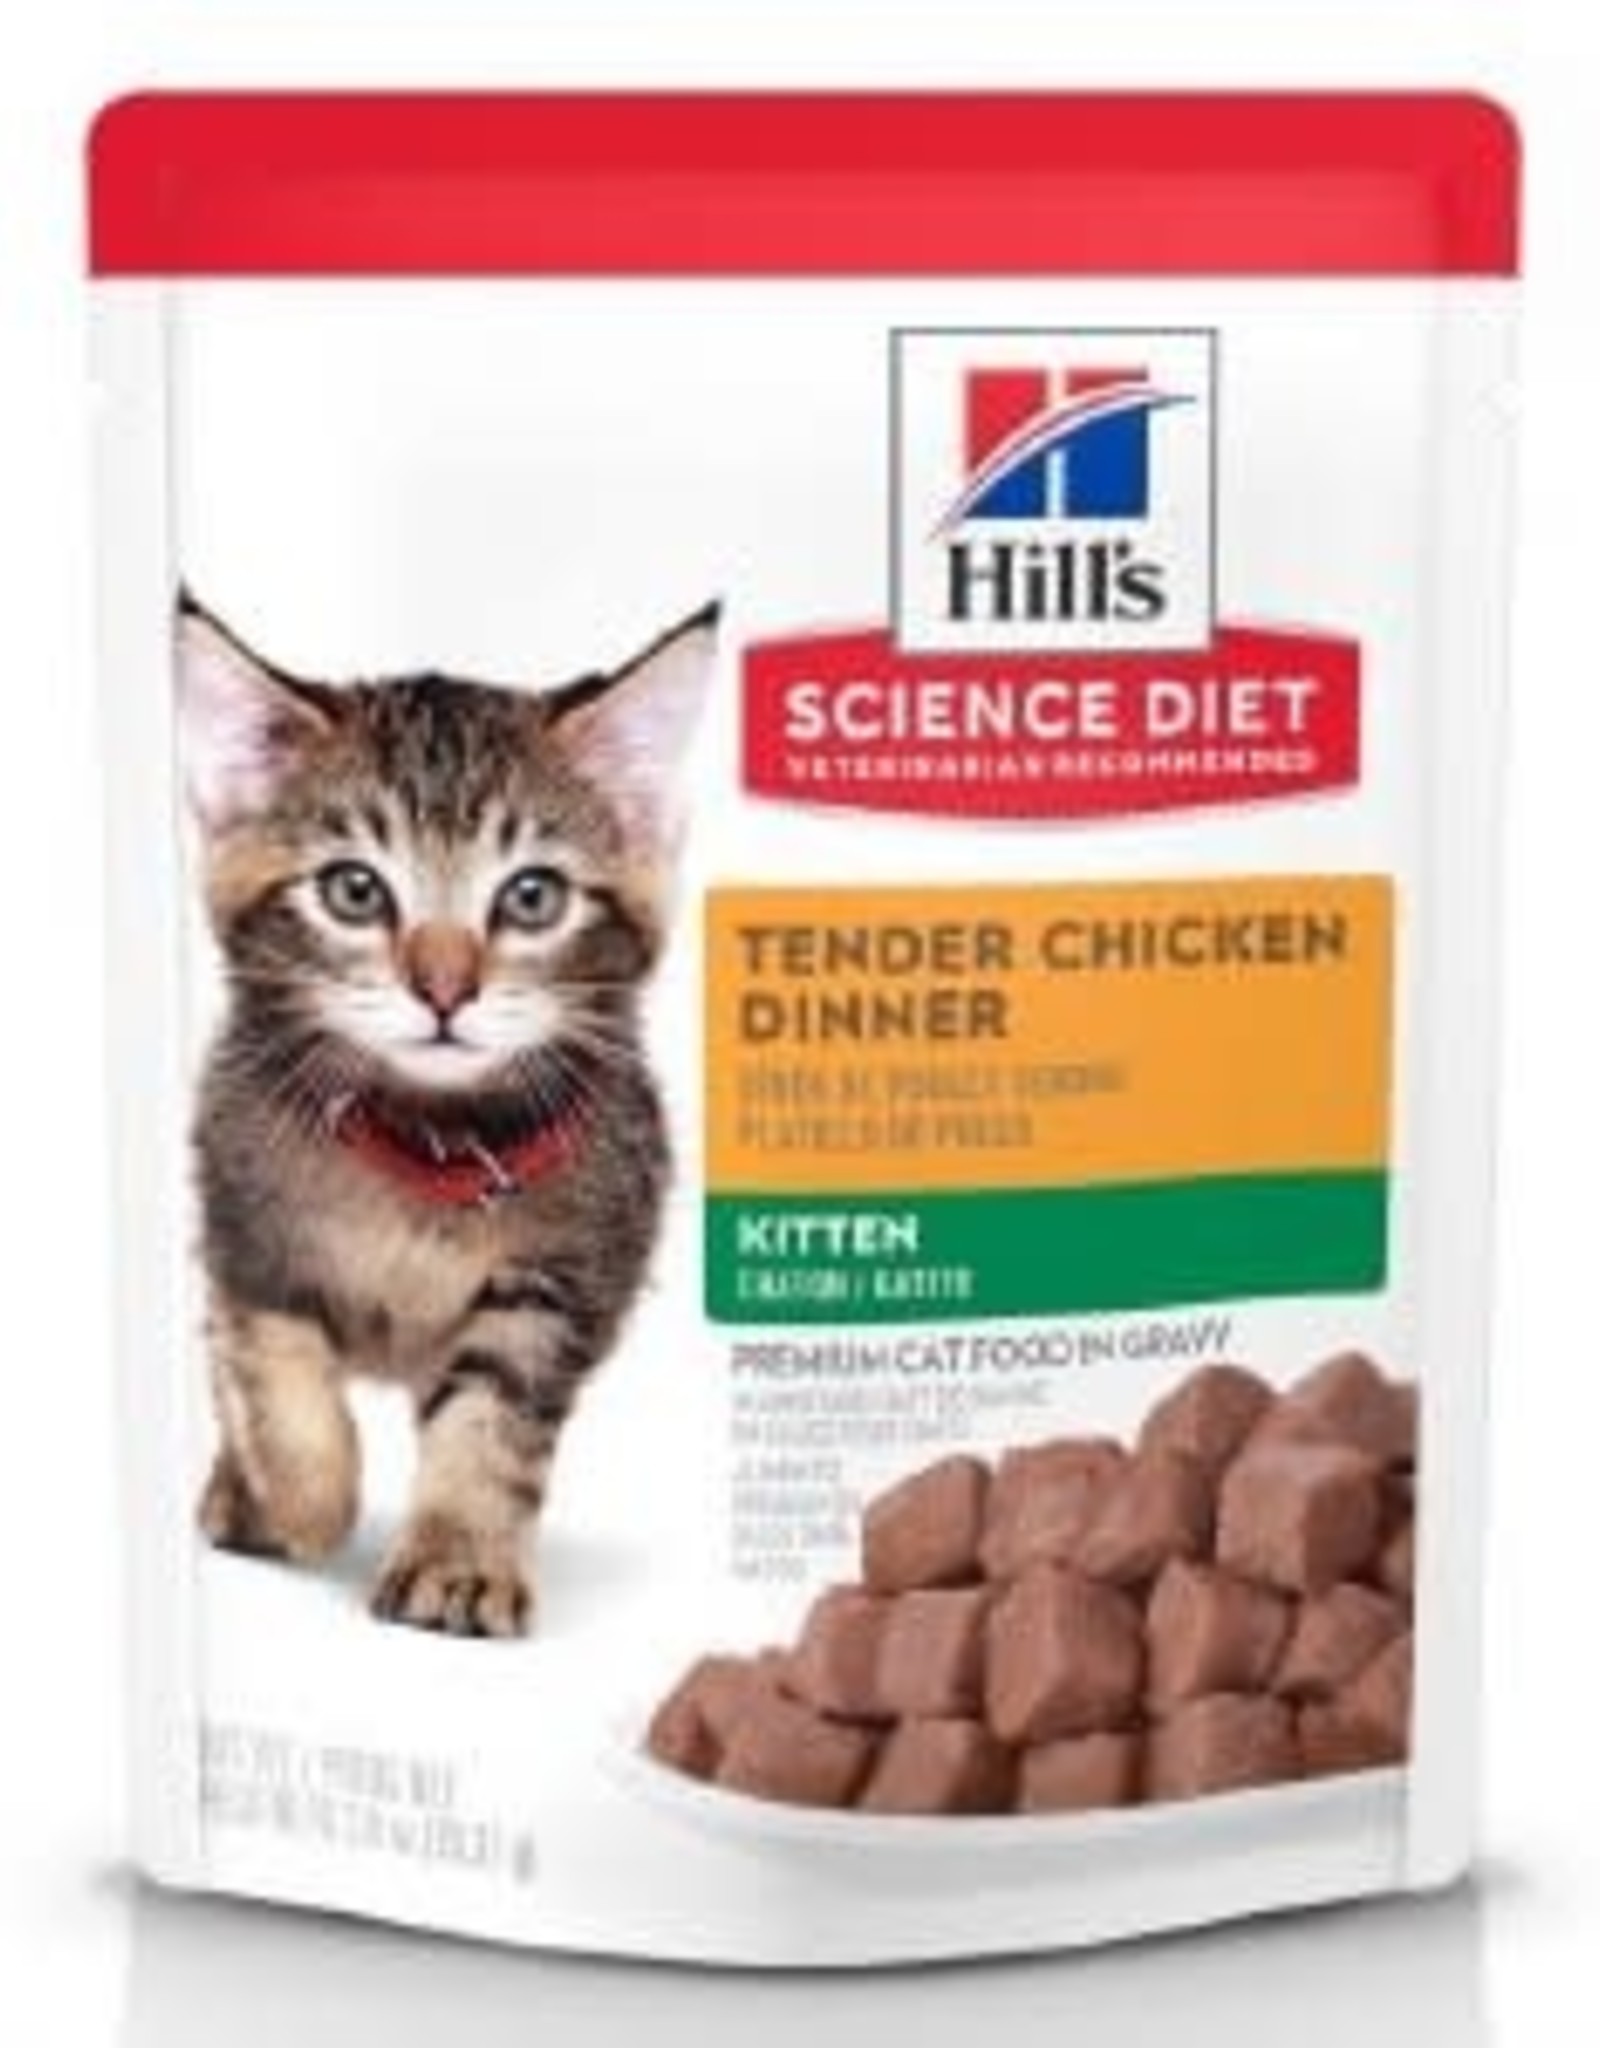 Hill's Science Pet Hill's Science Diet Kitten Tender Chicken Dinner 24 x 2.8oz (605143